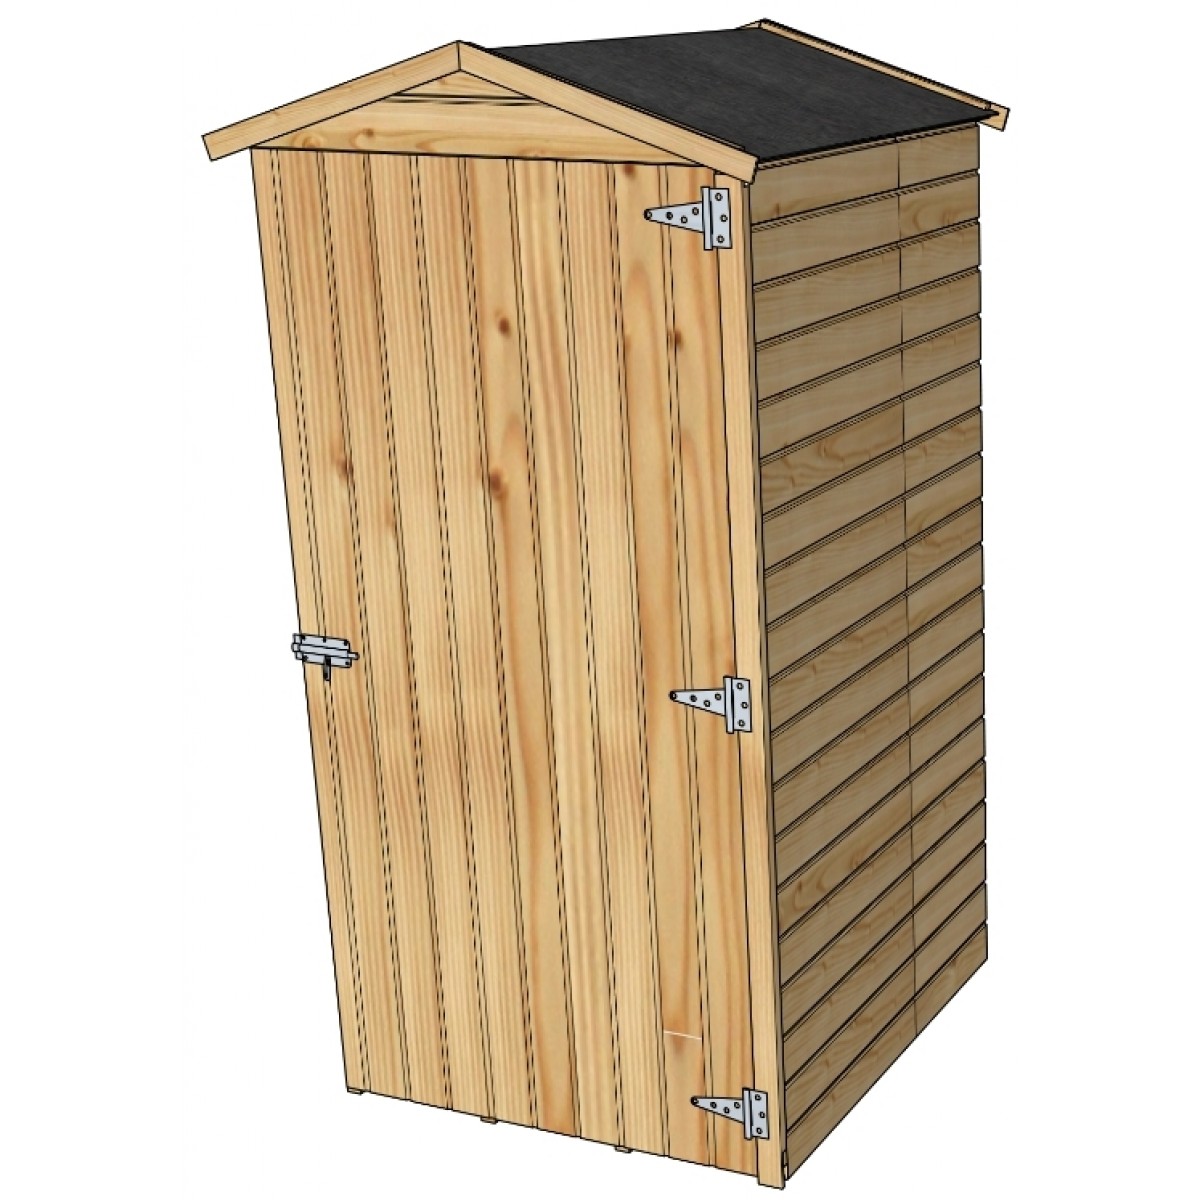 Lanitplast dřevěný domek SOLID ANITA 1 - 90 x 96 cm (S879-1) LG2389